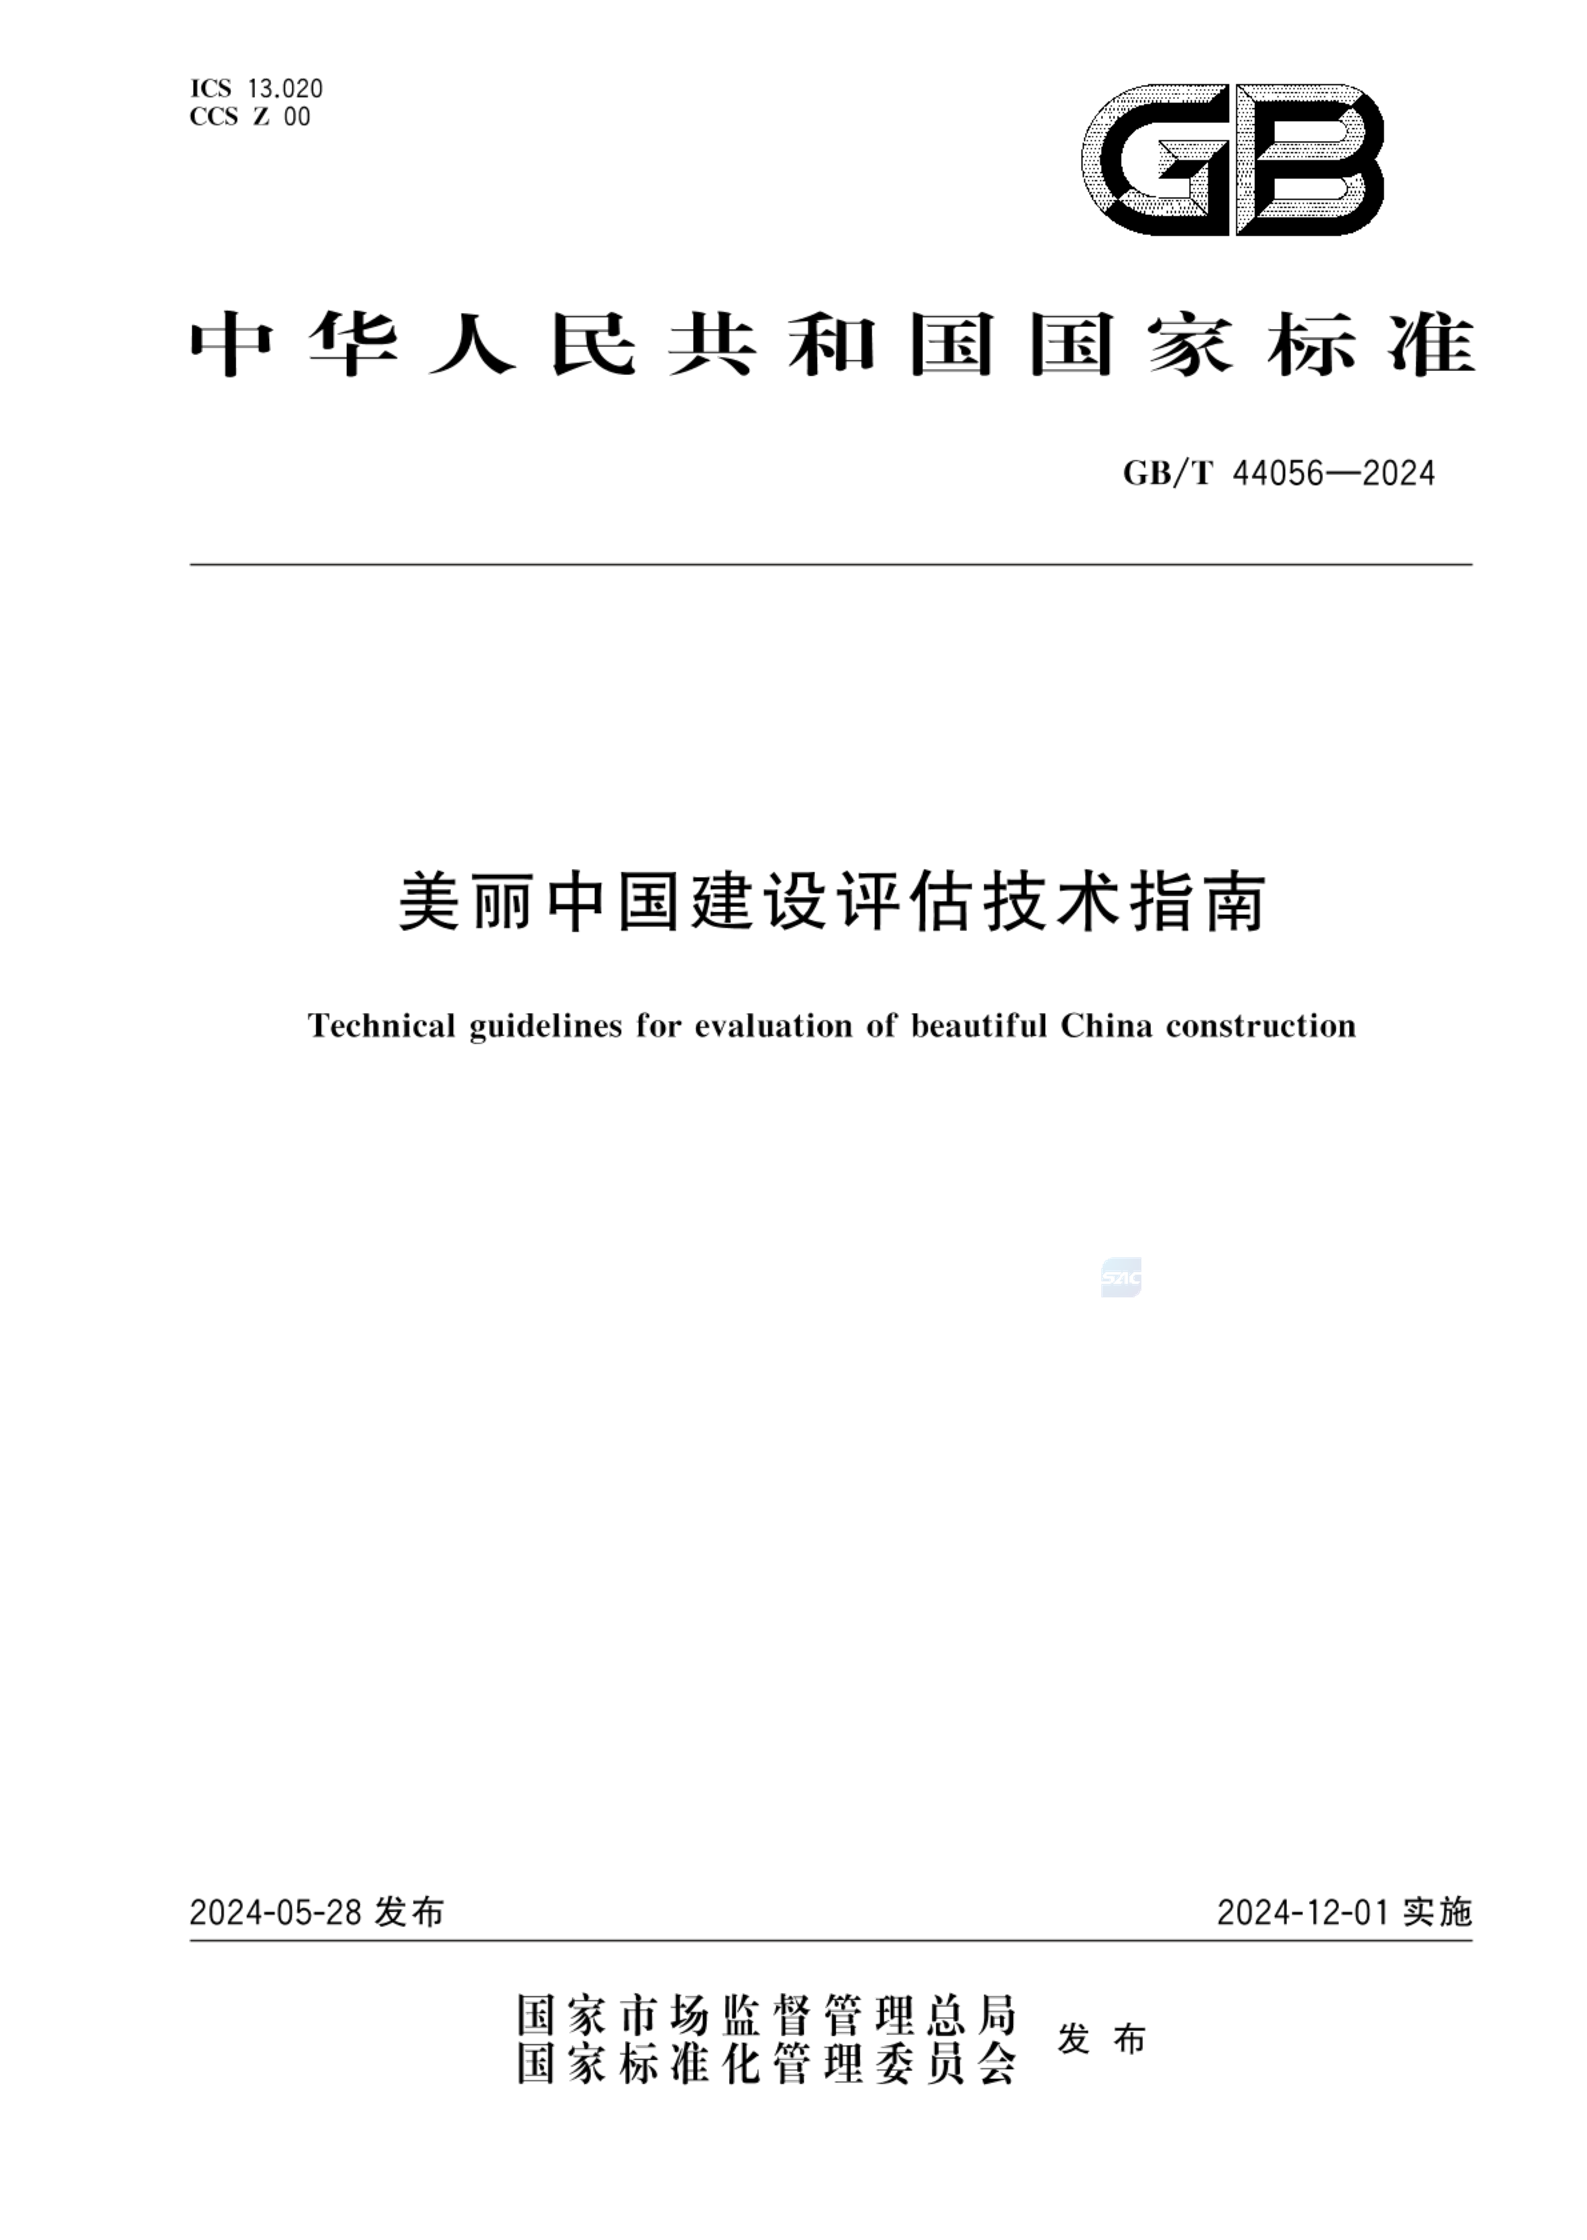 GB/T 44056-2024美丽中国建设评估技术指南